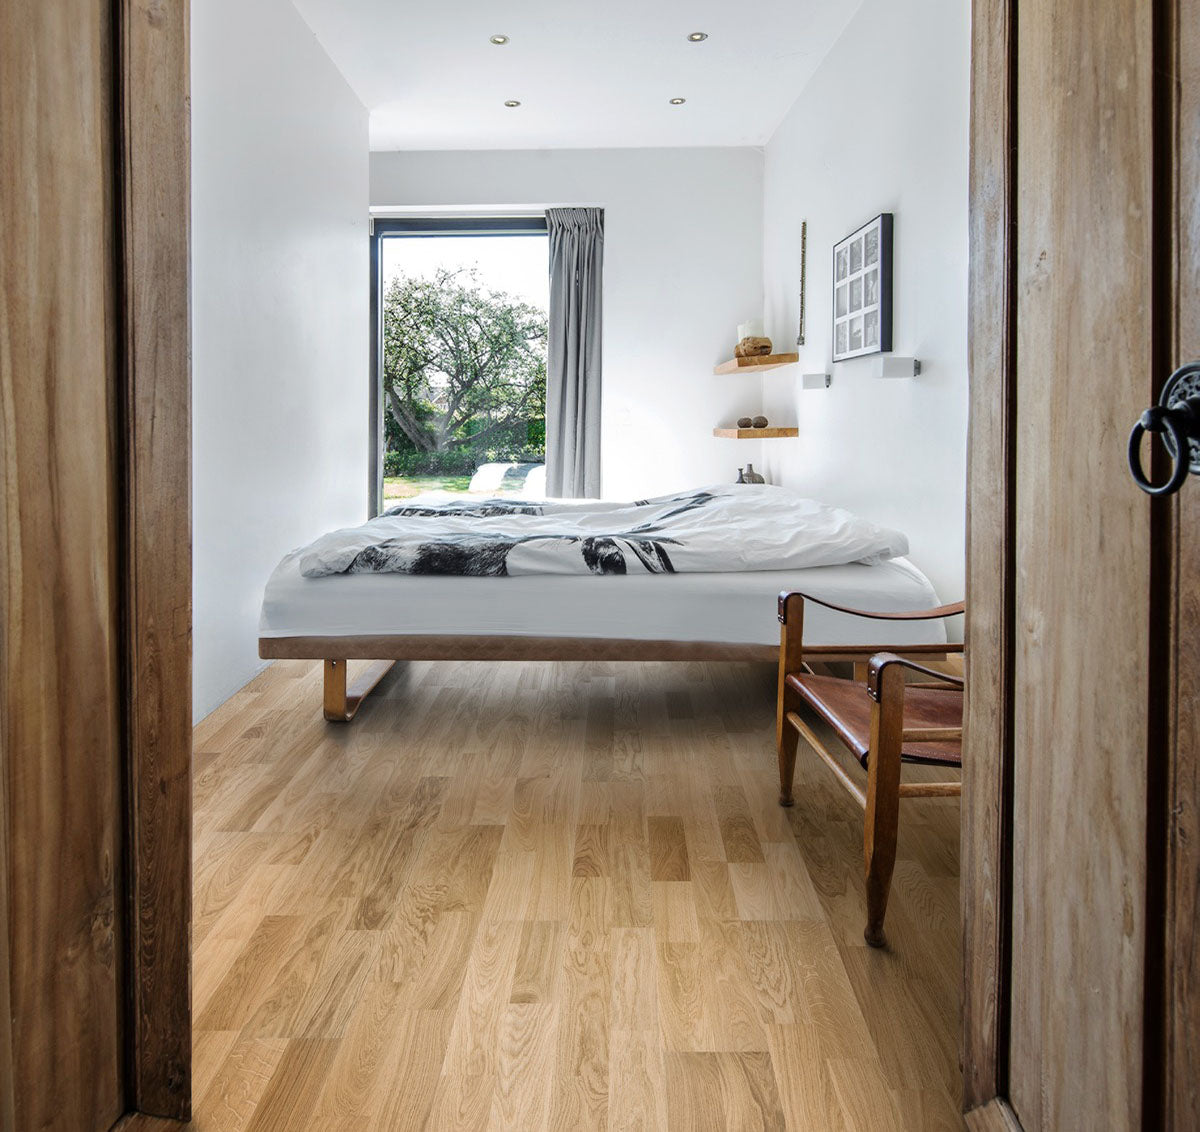 Natural white oak hardwood flooring used in bedroom remodel inspiration. louisiana modern engineered hardwood flooring by stuga